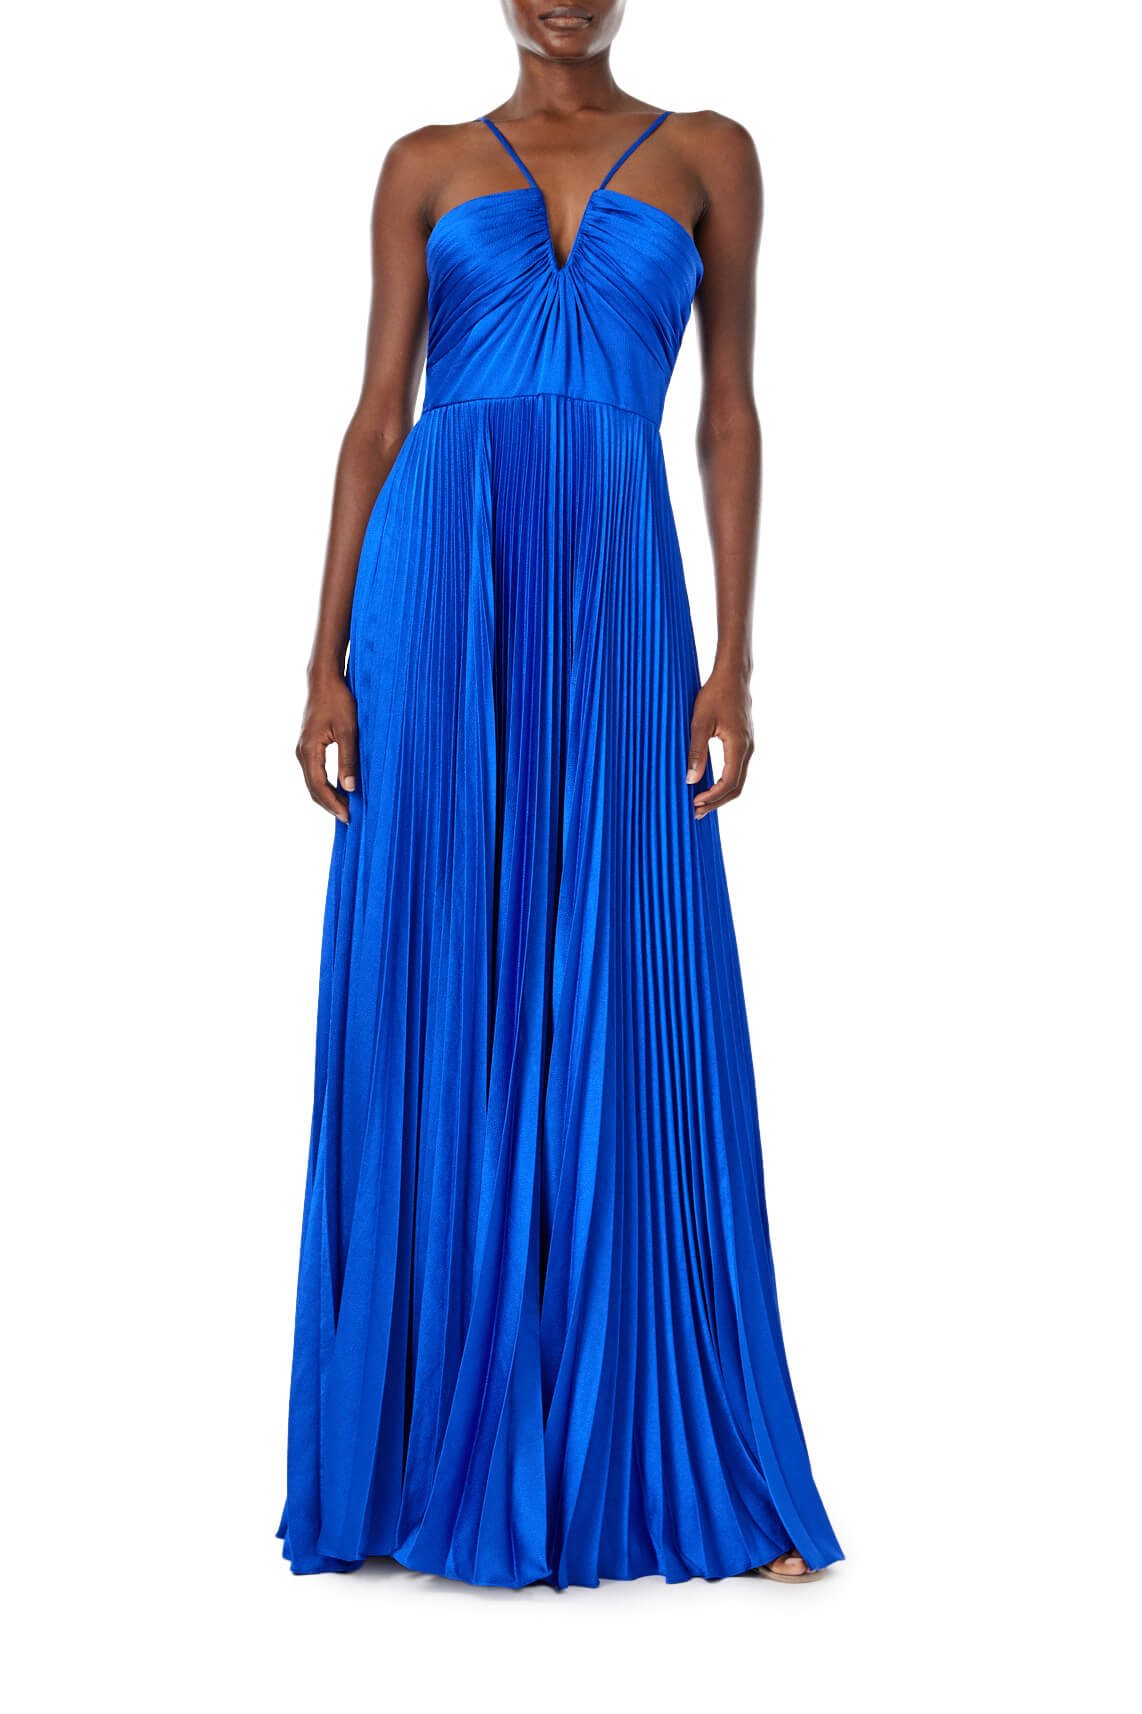 ML Monique Lhuillier cobalt blue satin long dress with halter neckline.